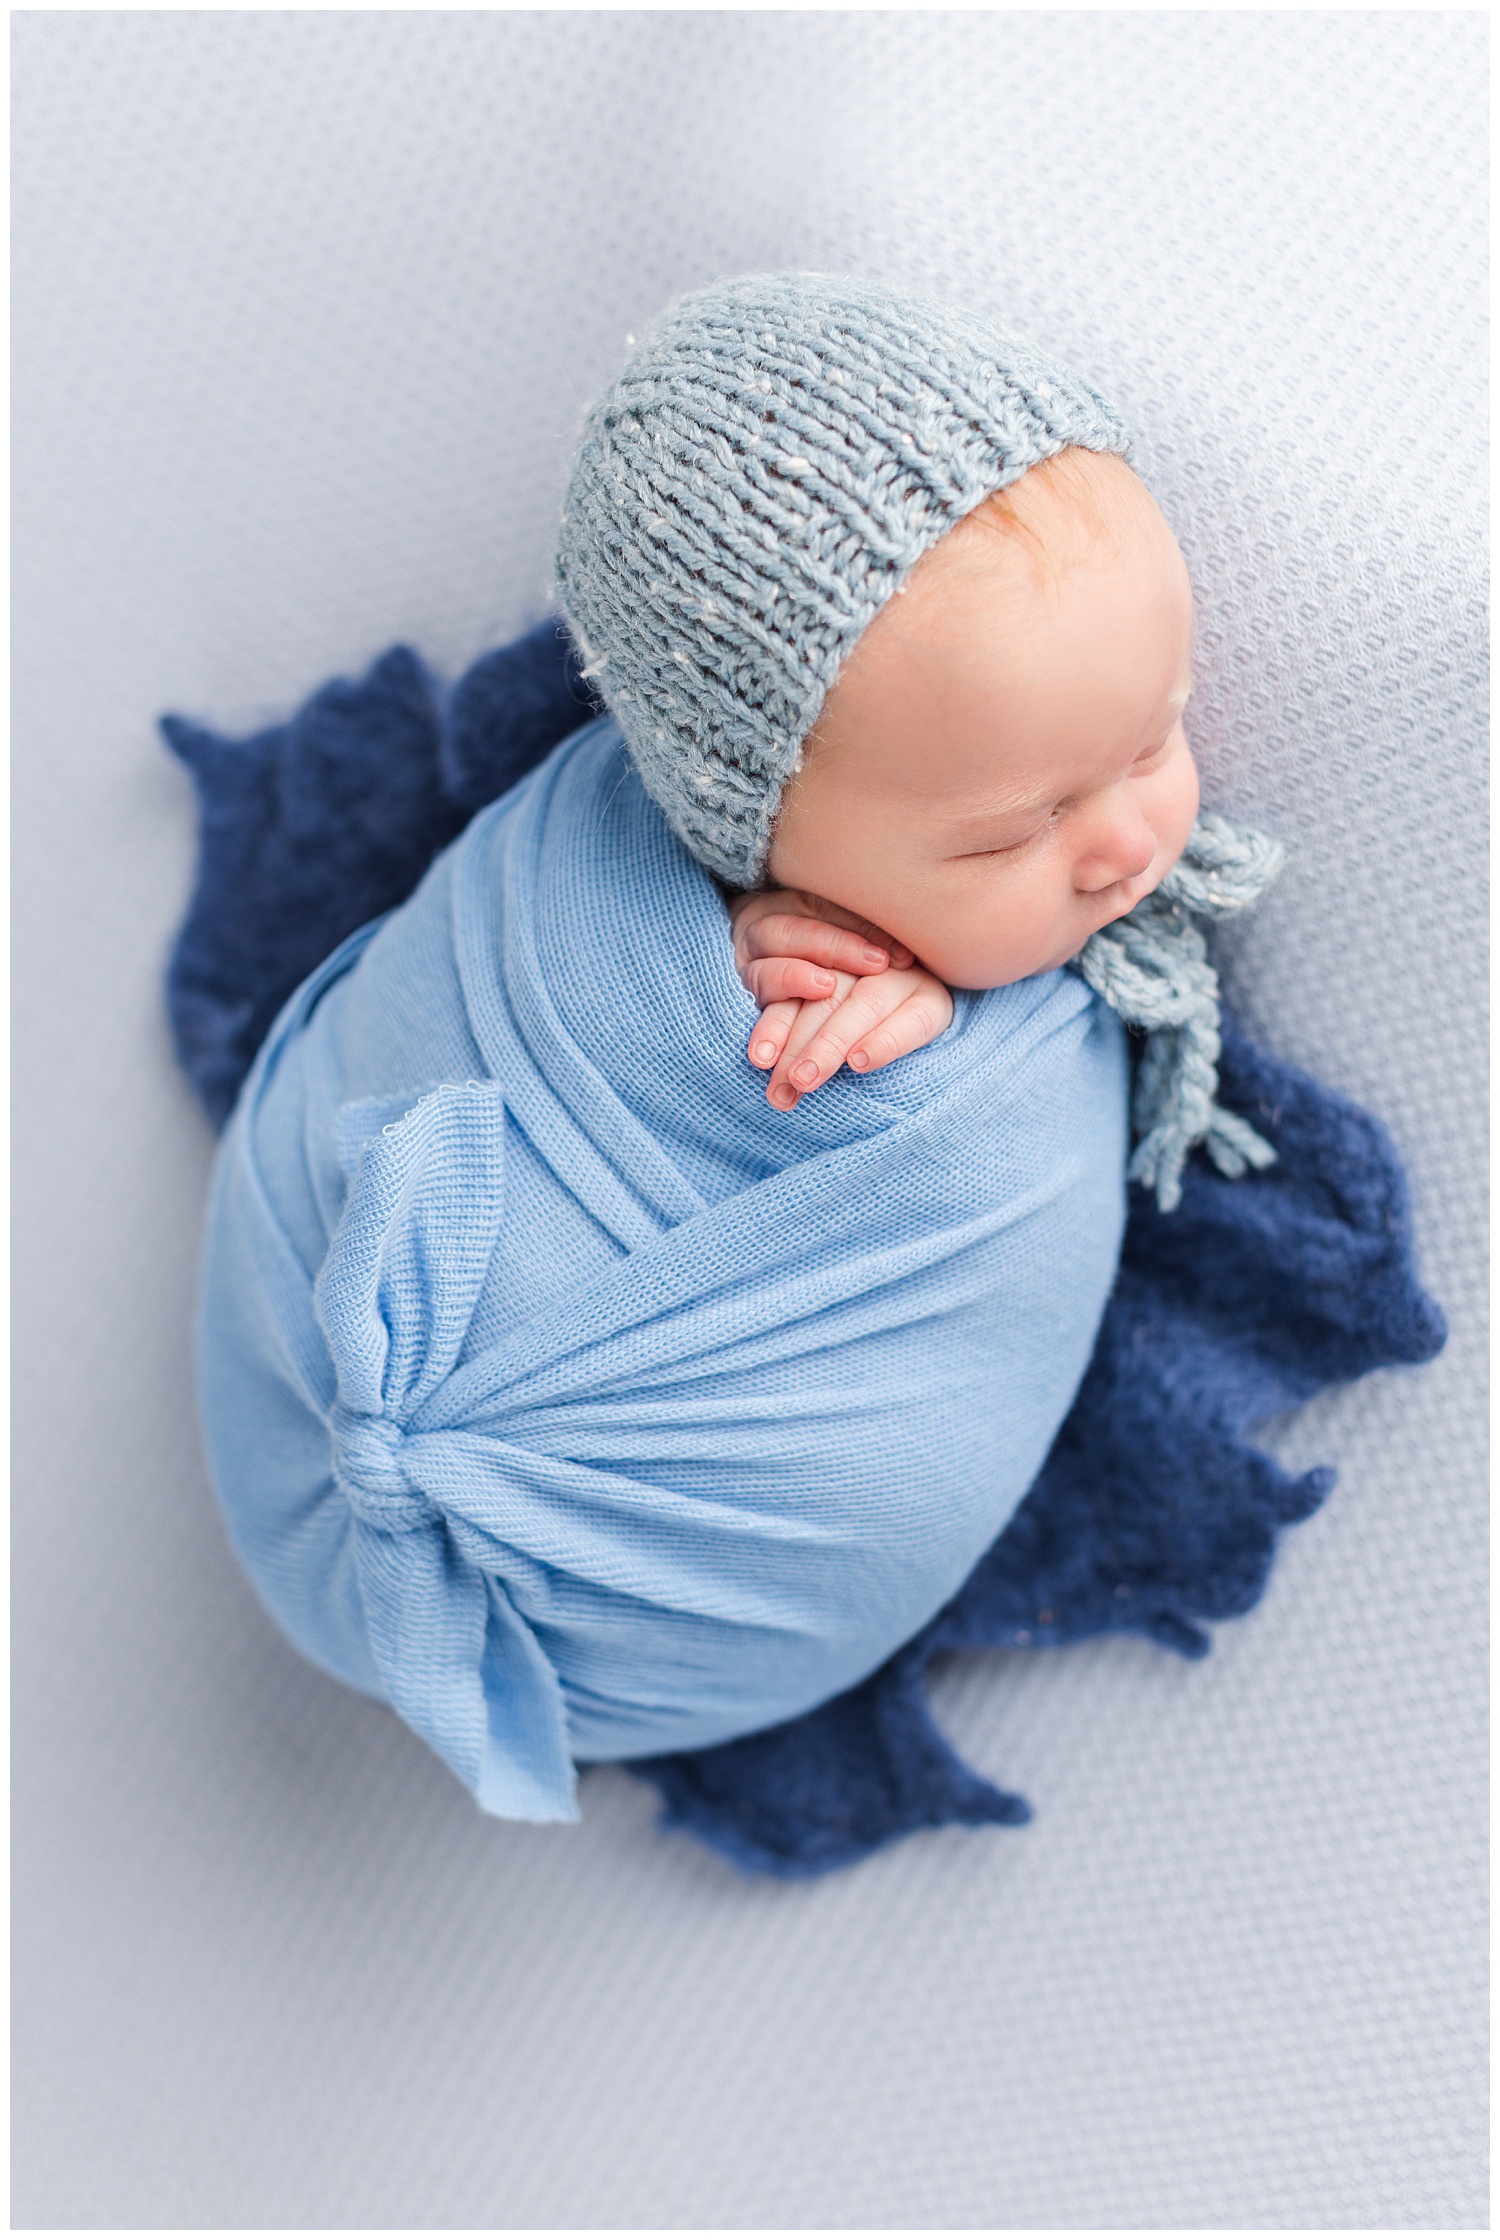 Newborn baby Luka wrapped in shades of blue | CB Studio